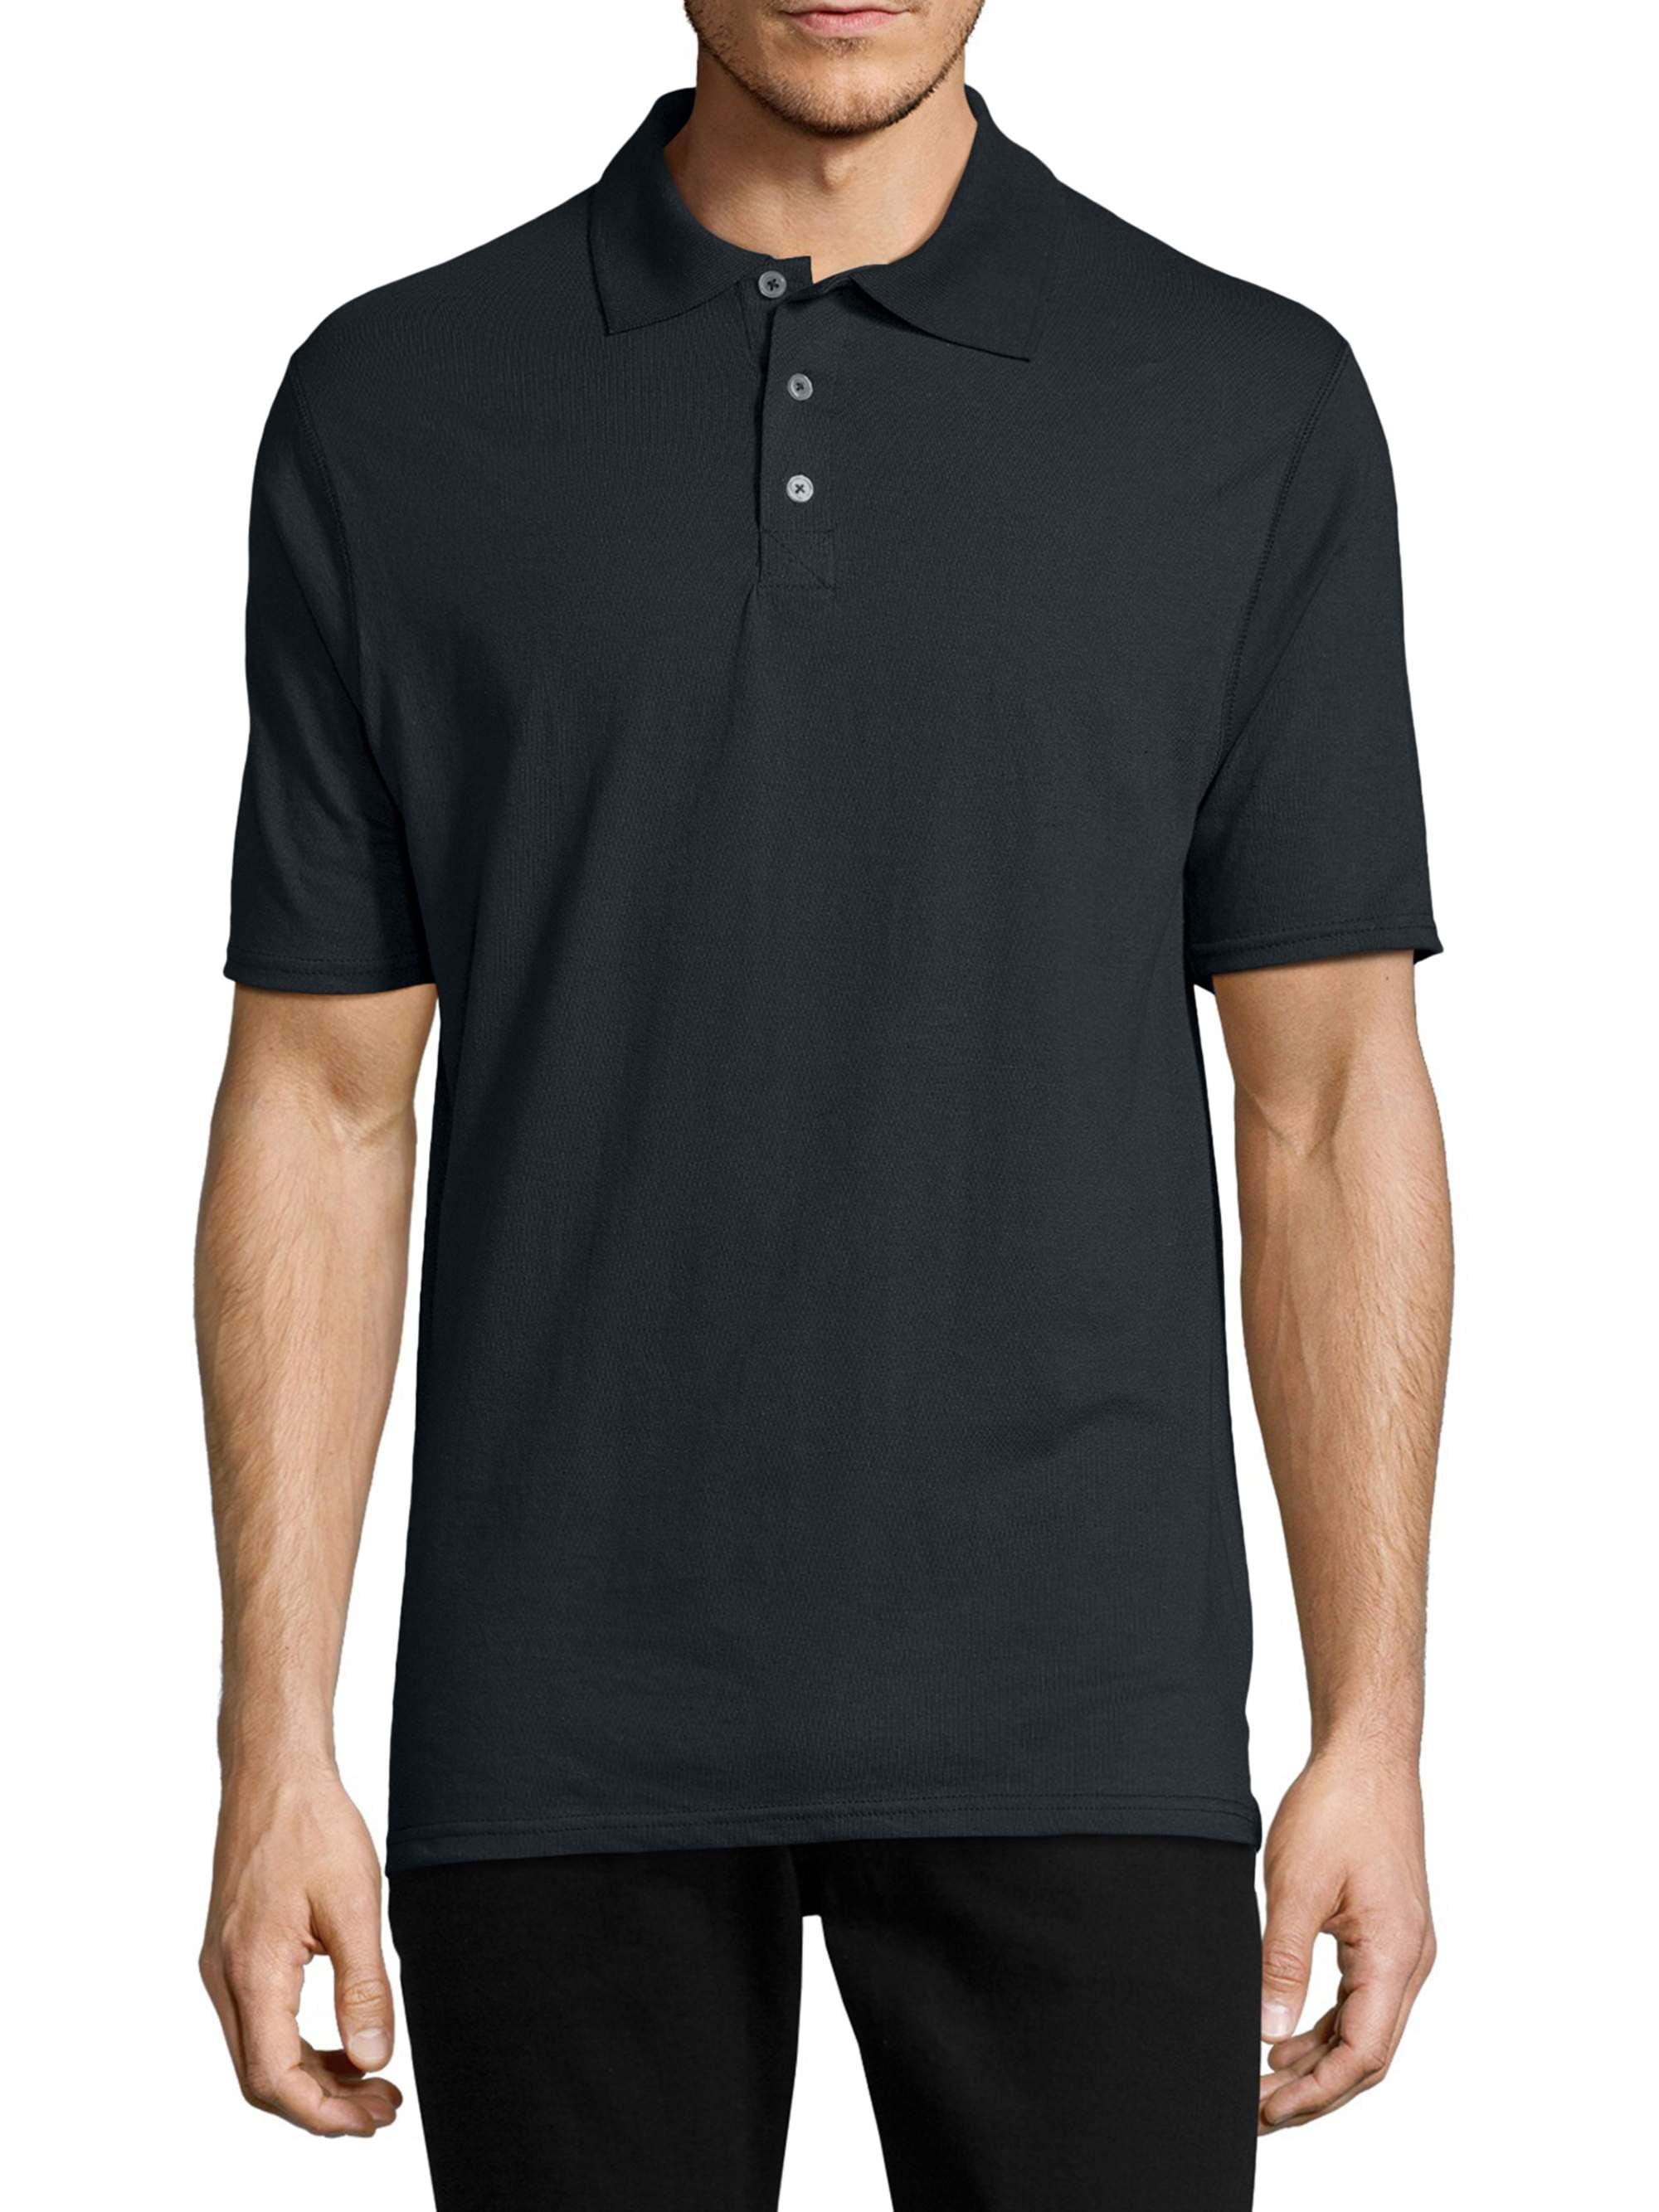 Hanes Men's X-Temp Short Sleeve Polo Shirt - Walmart.com